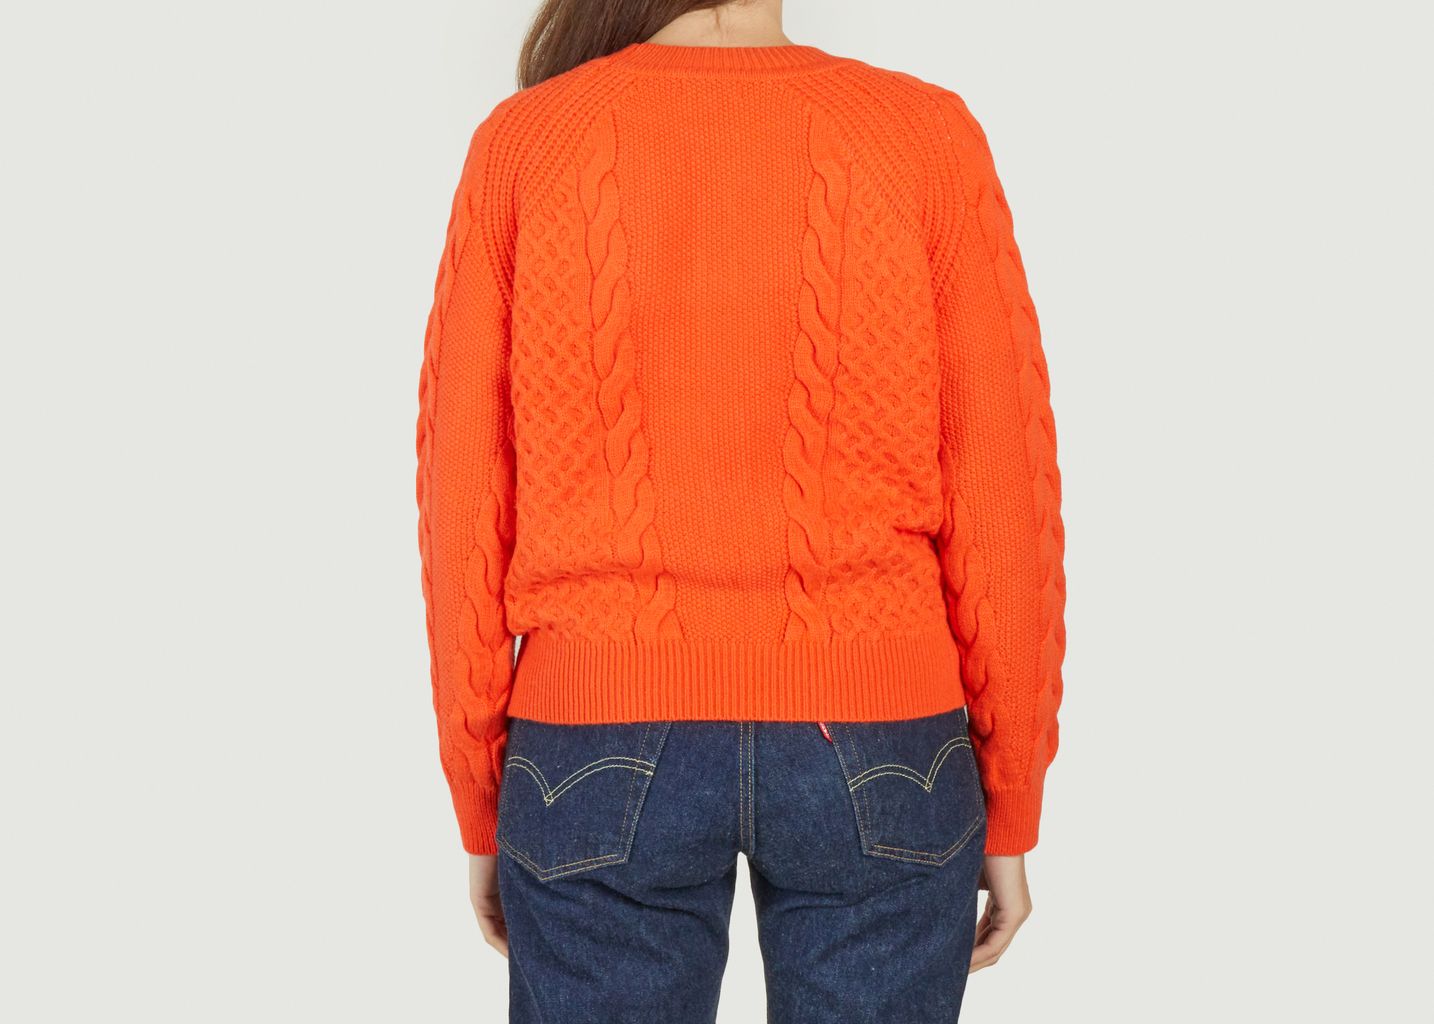 Pomeroy sweater - Suncoo